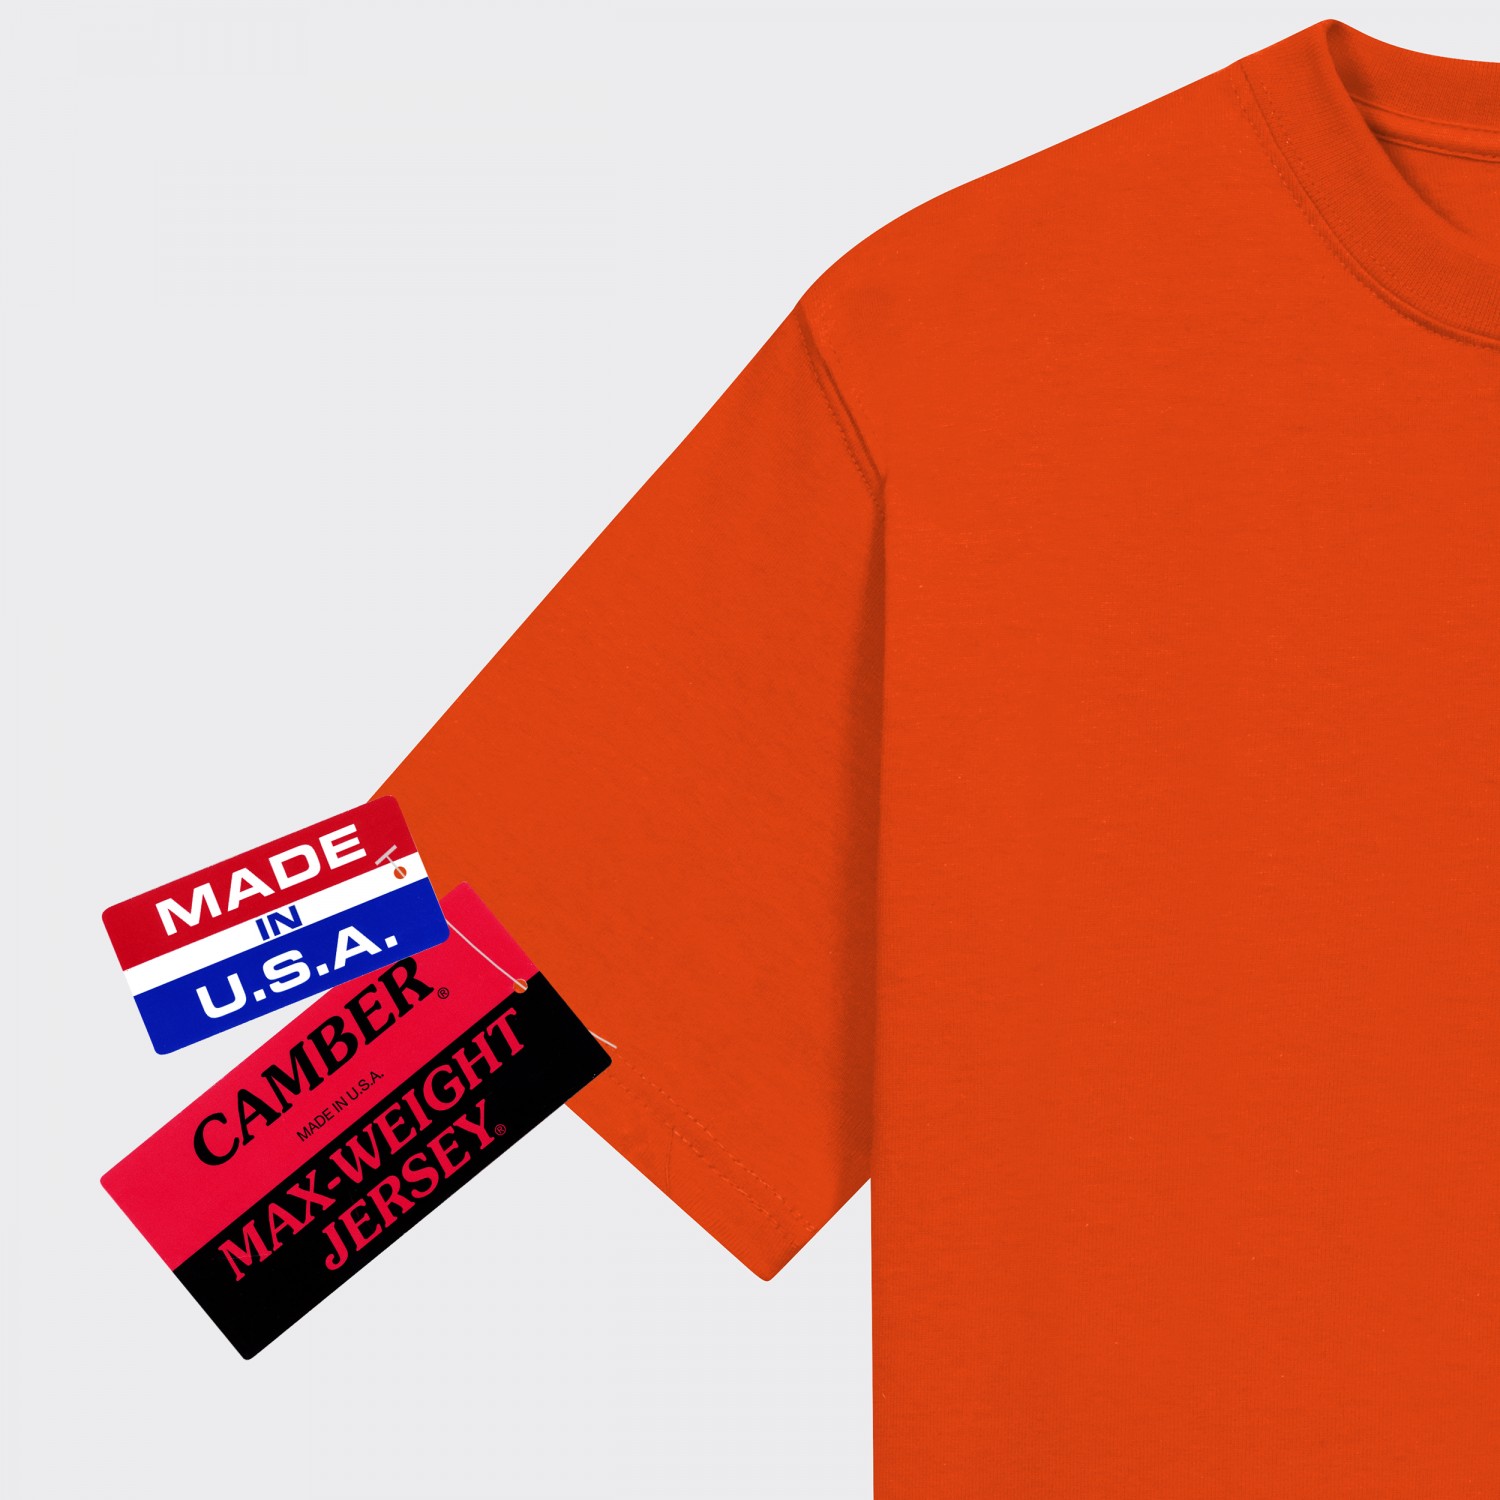 Camber USA Pocket T-shirt Orange : 